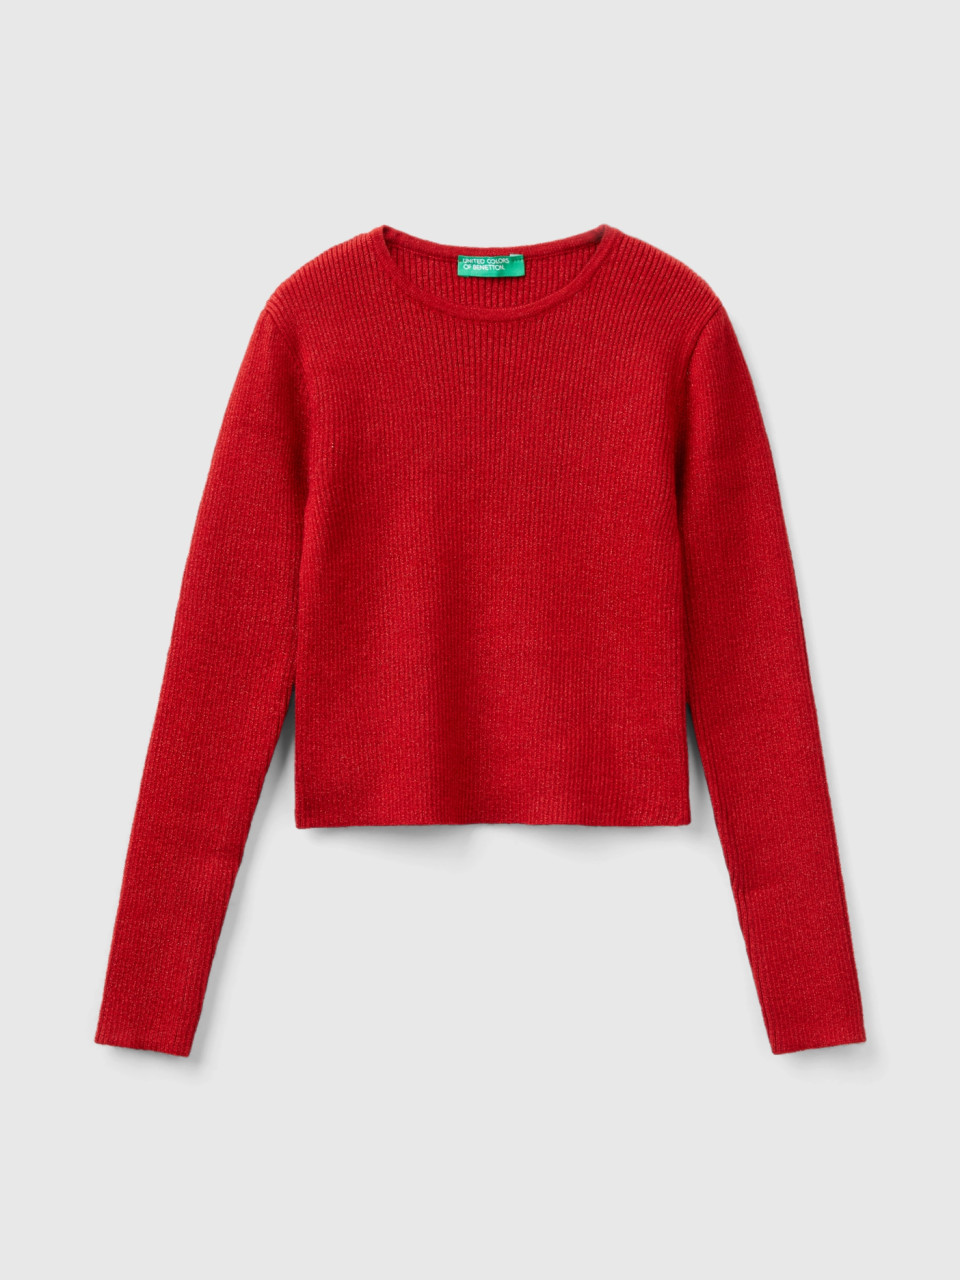 Benetton, Sweater With Lurex, Red, Kids